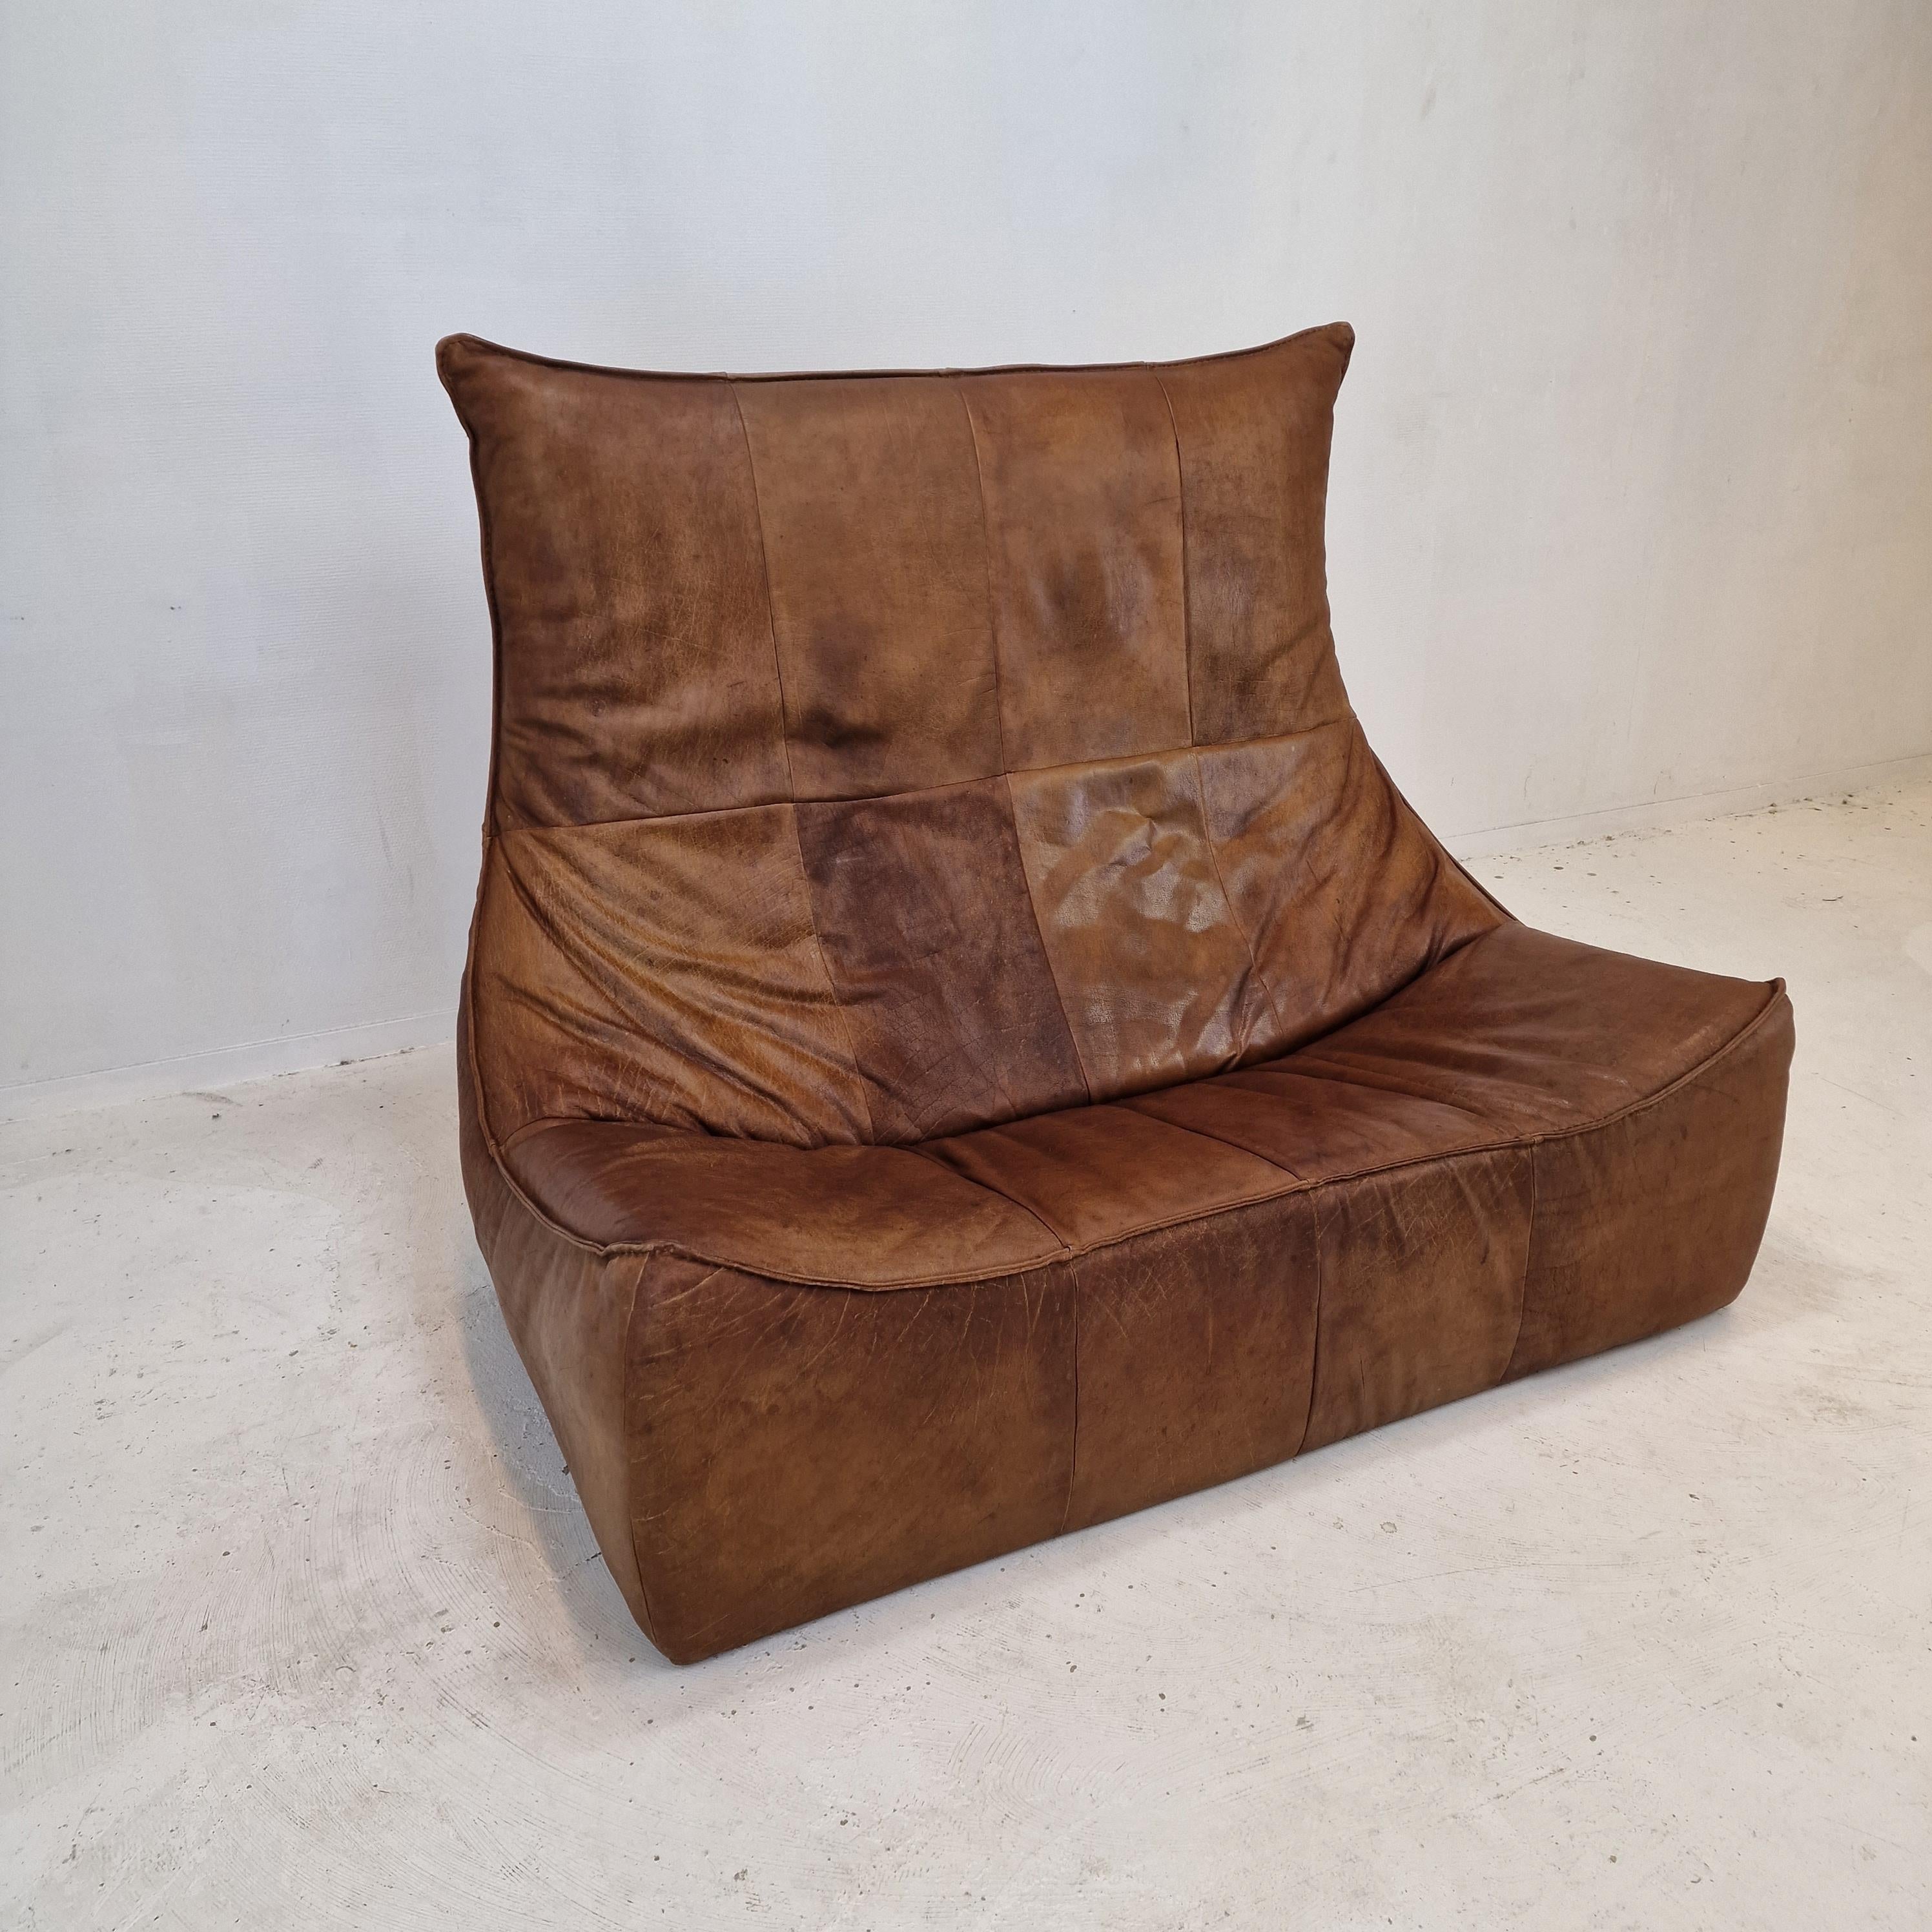 Montis “The Rock” Sofa In Brown Leather By Gerard Van Den Berg, 1970s In Good Condition For Sale In Oud Beijerland, NL